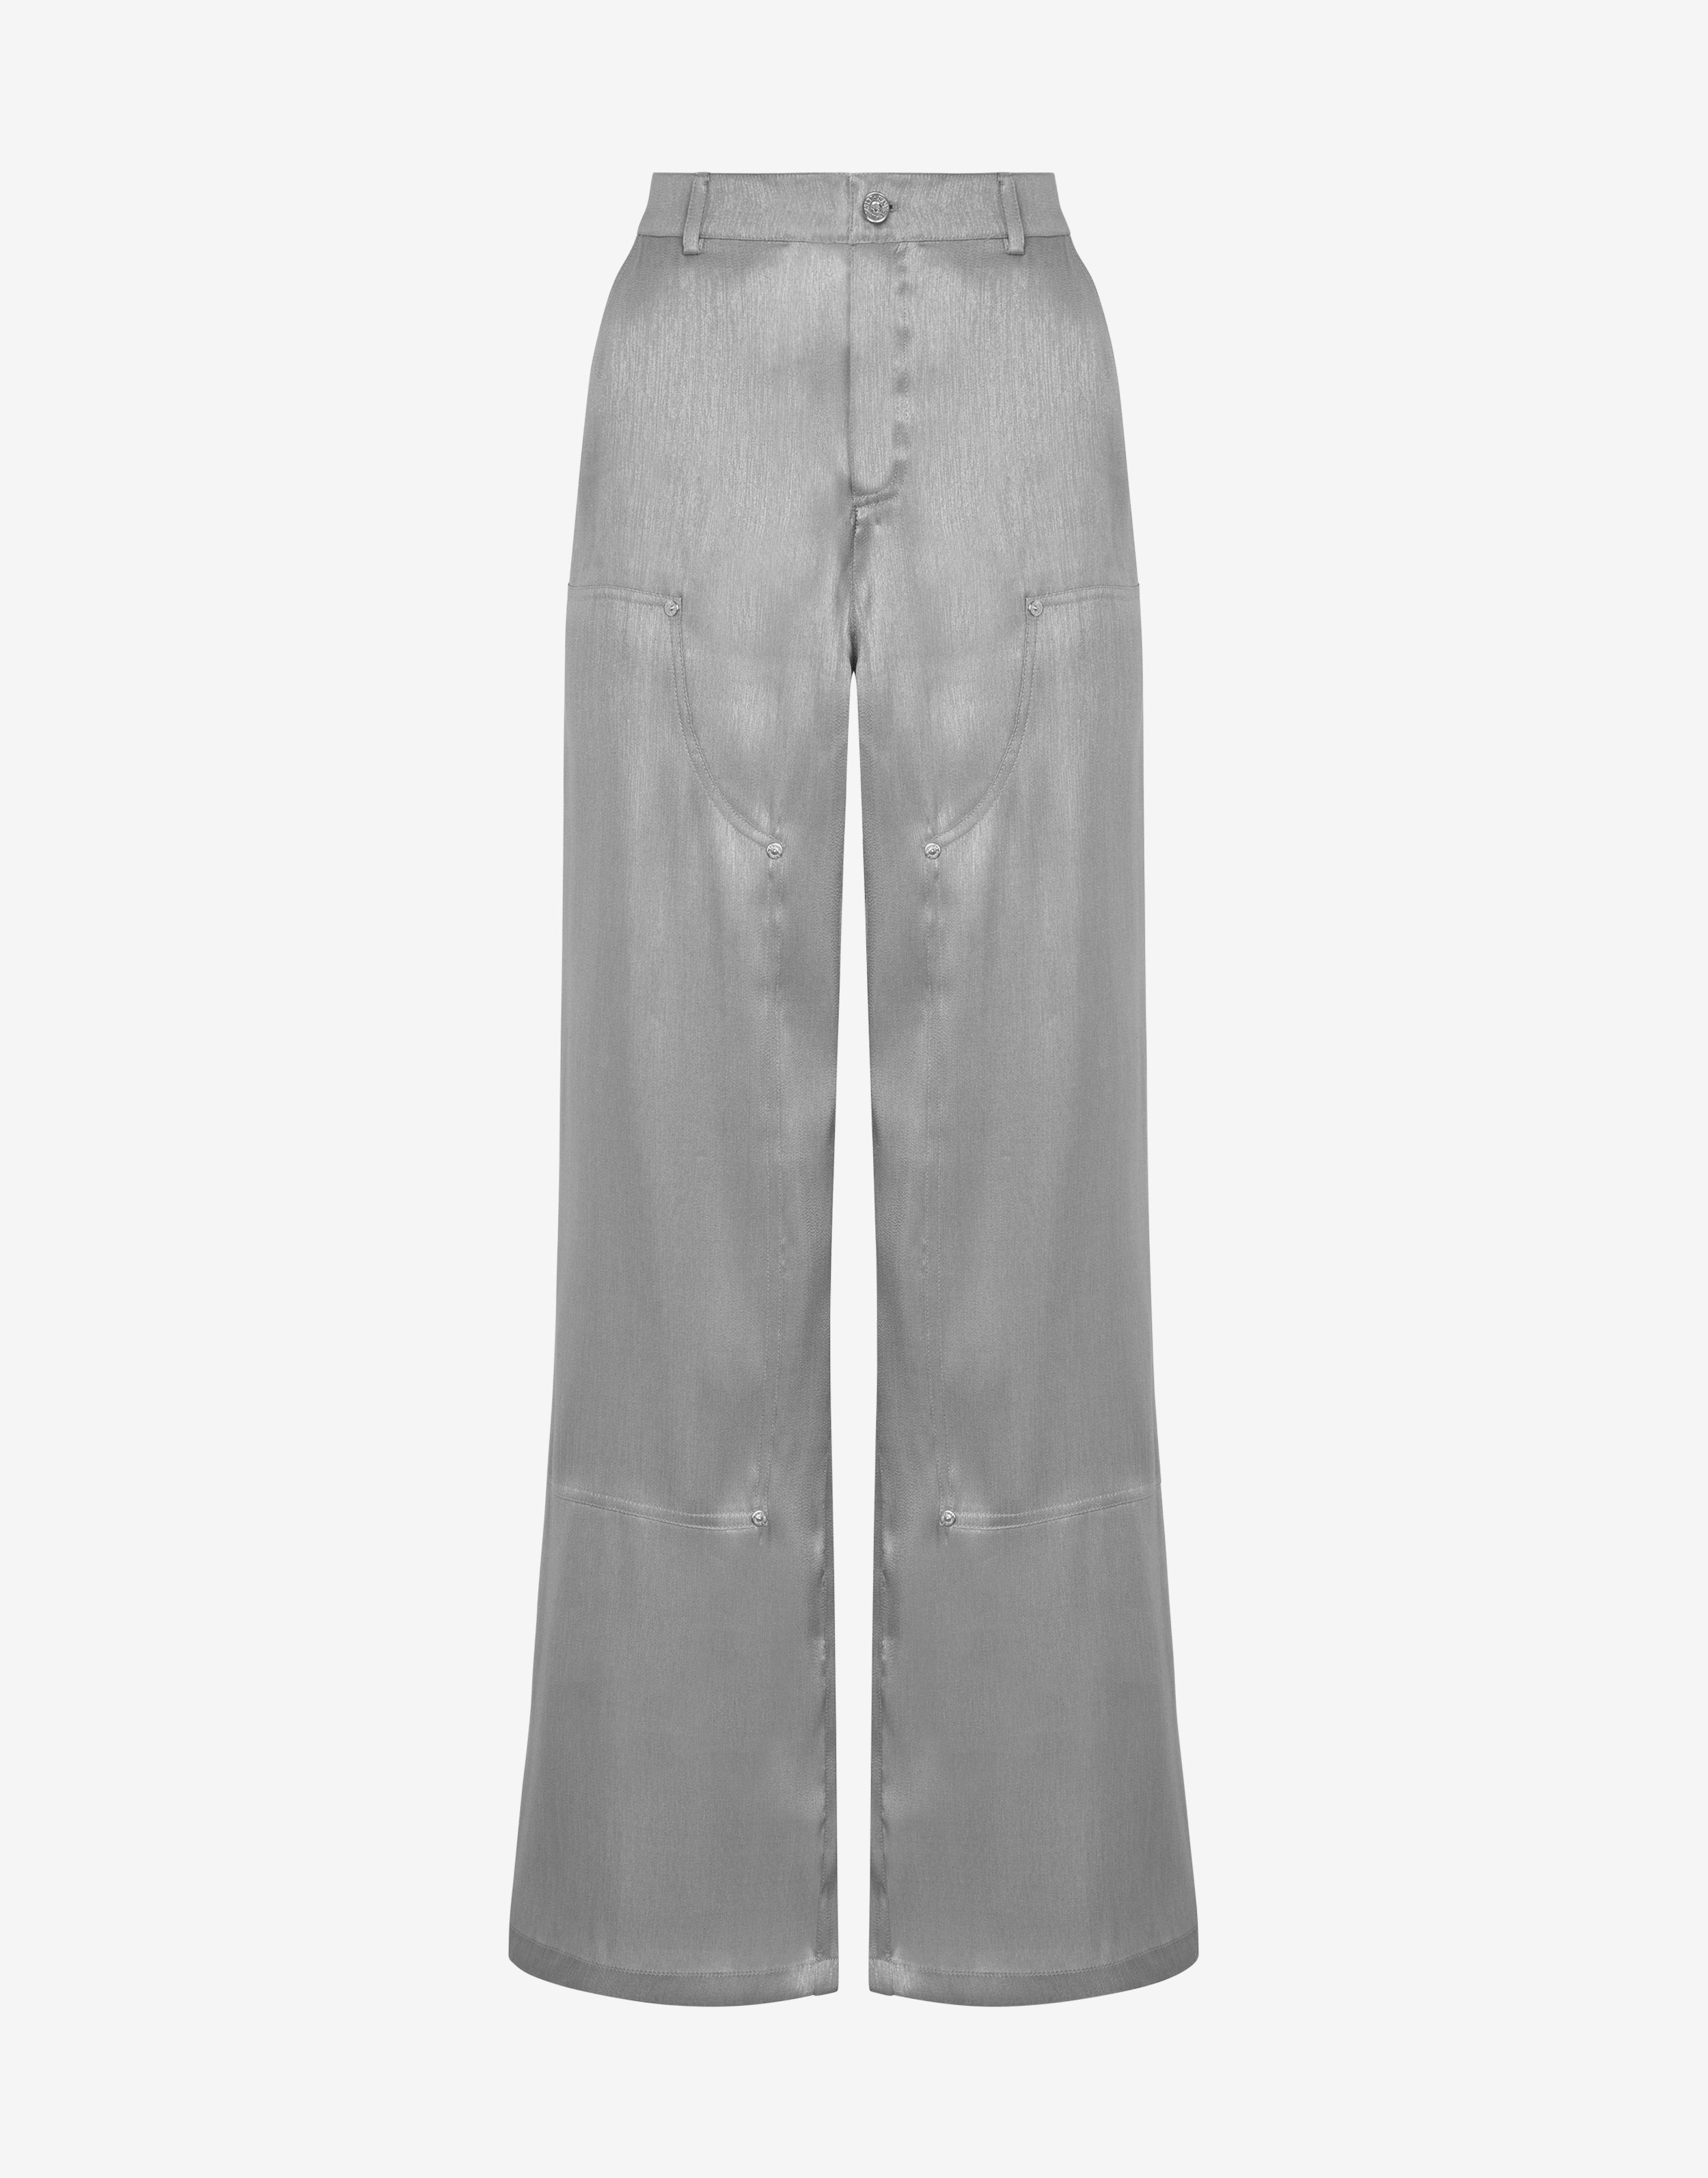 Yollmart Women's Glitter Silver High Waisted Bell Bottom Flared Pants Wide  Leg Trousers-Silverlight-M at Amazon Women's Clothing store